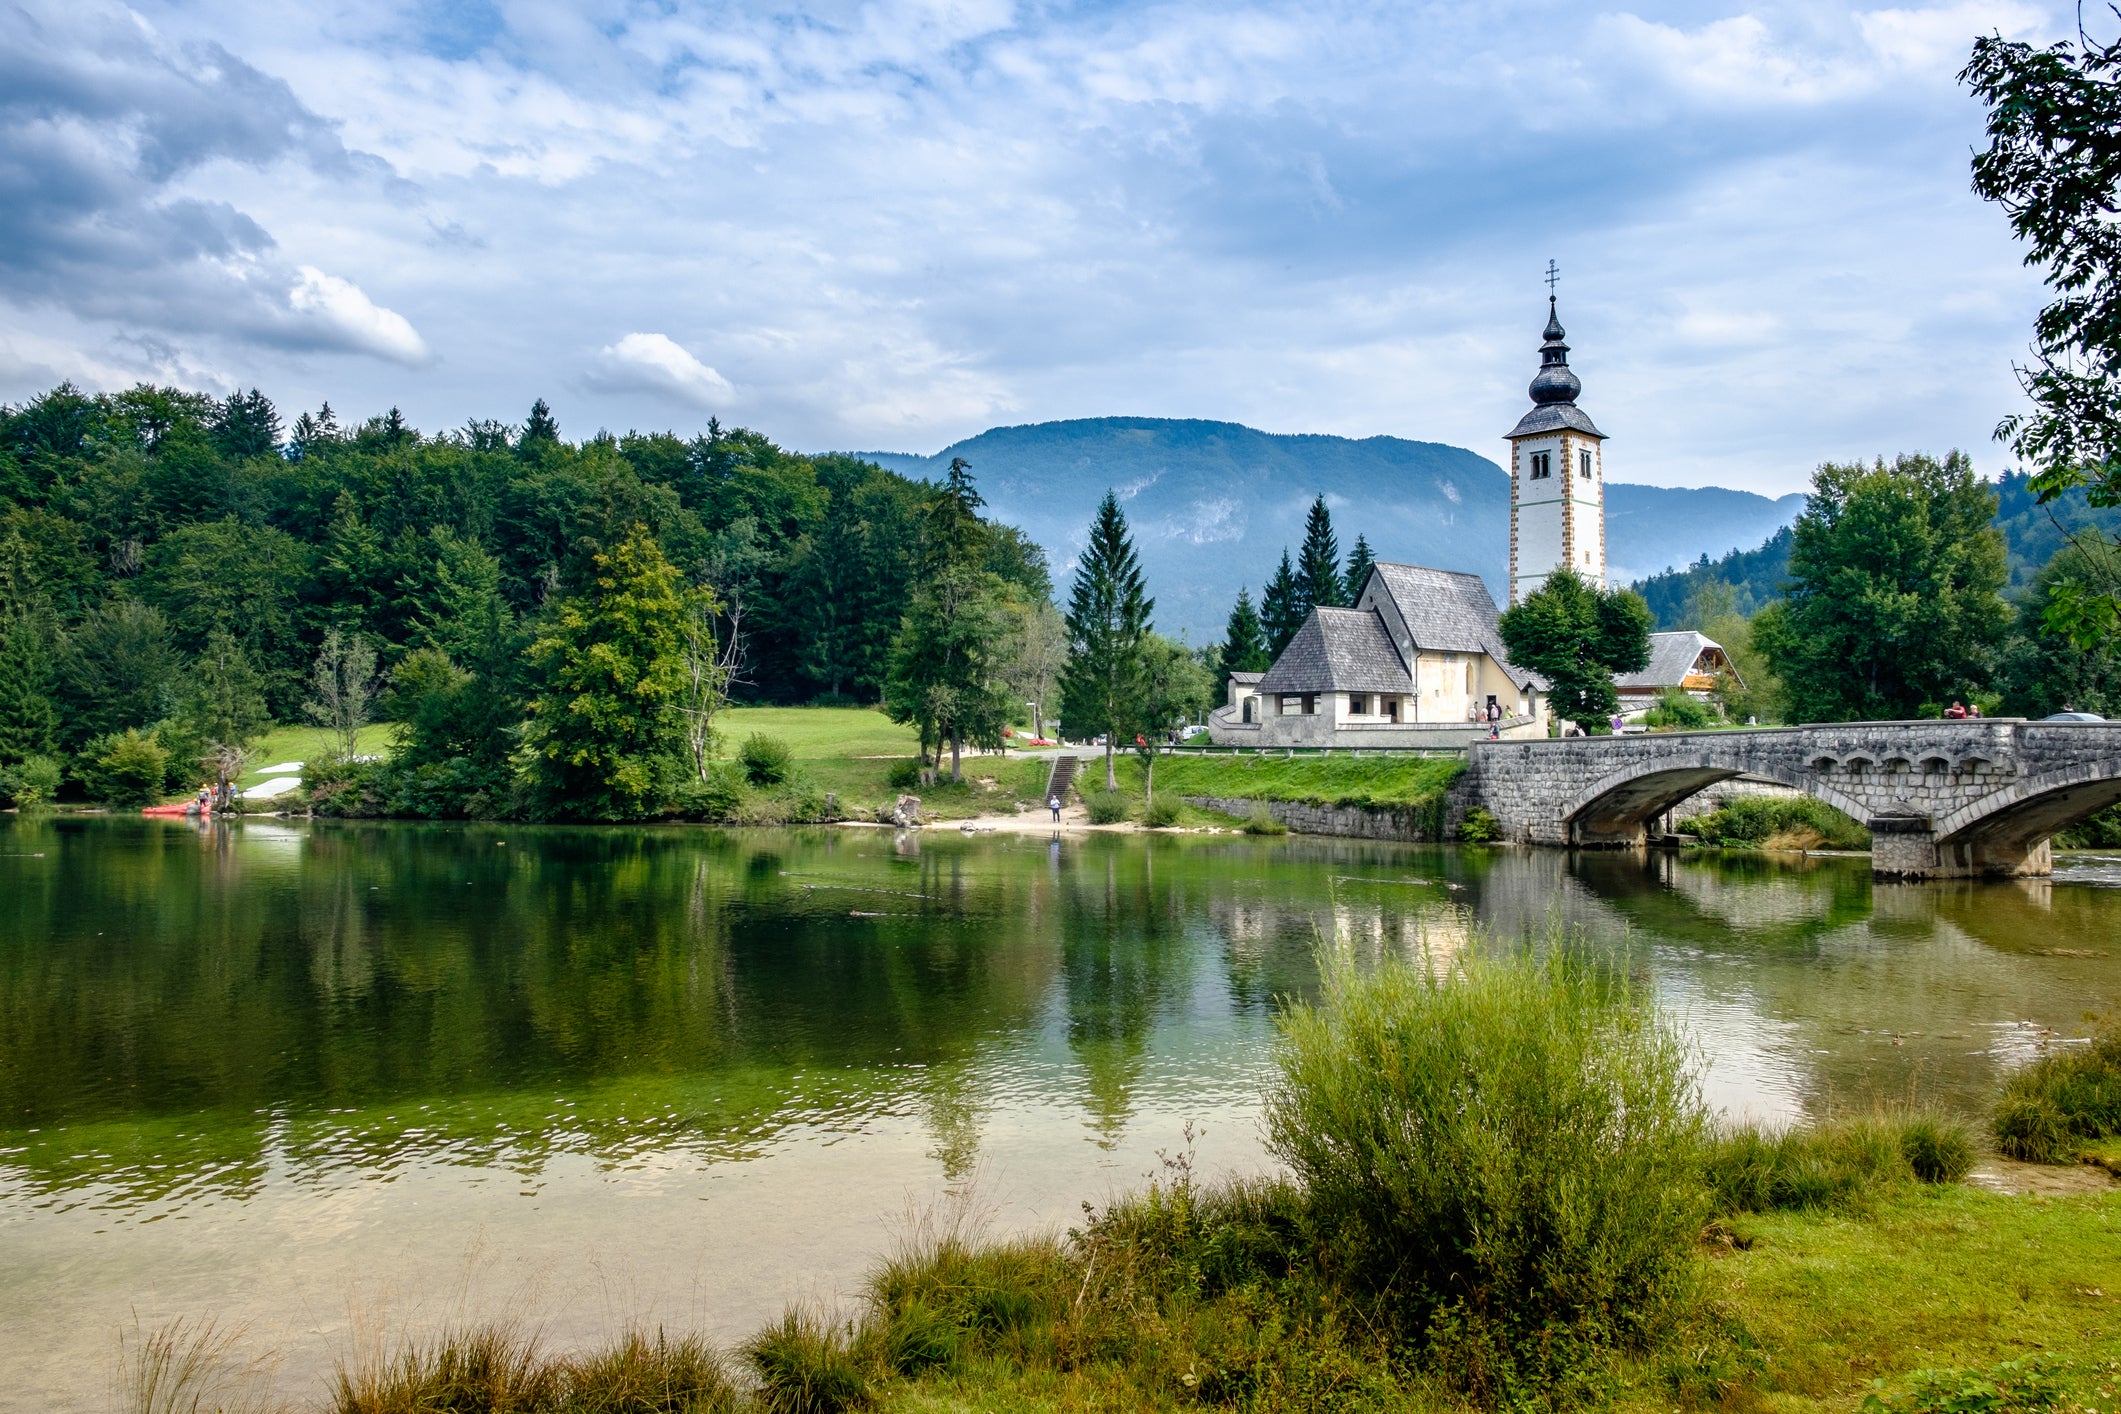 Lake Bohinj is a short drive from Ljubljana